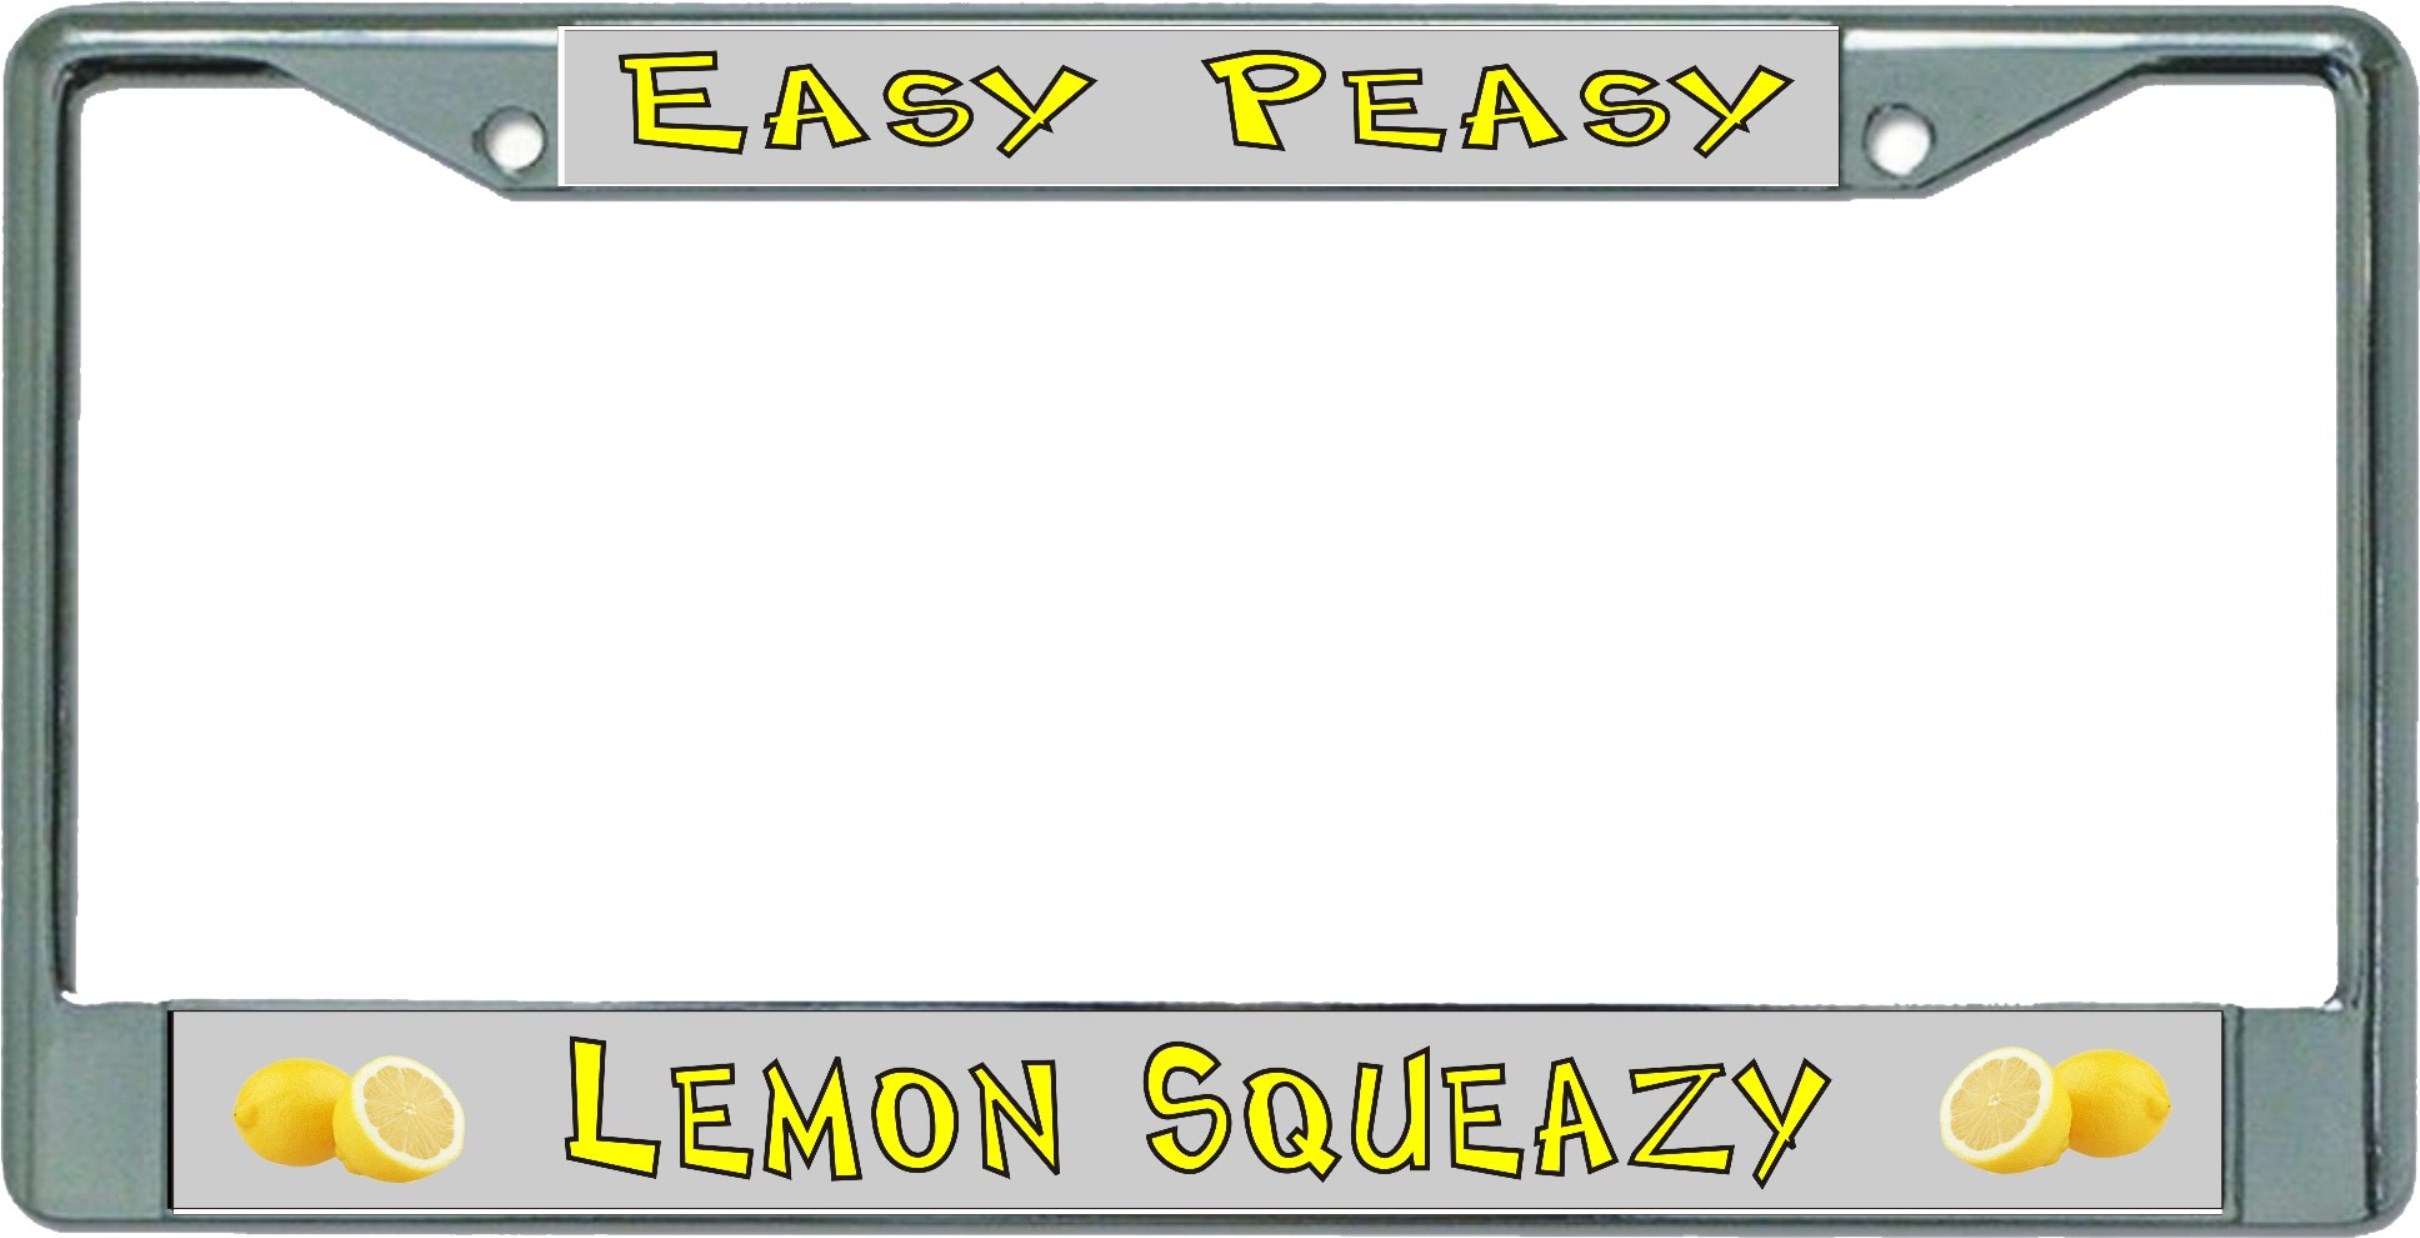 Easy Peasy Lemon Squeazy Chrome License Plate FRAME